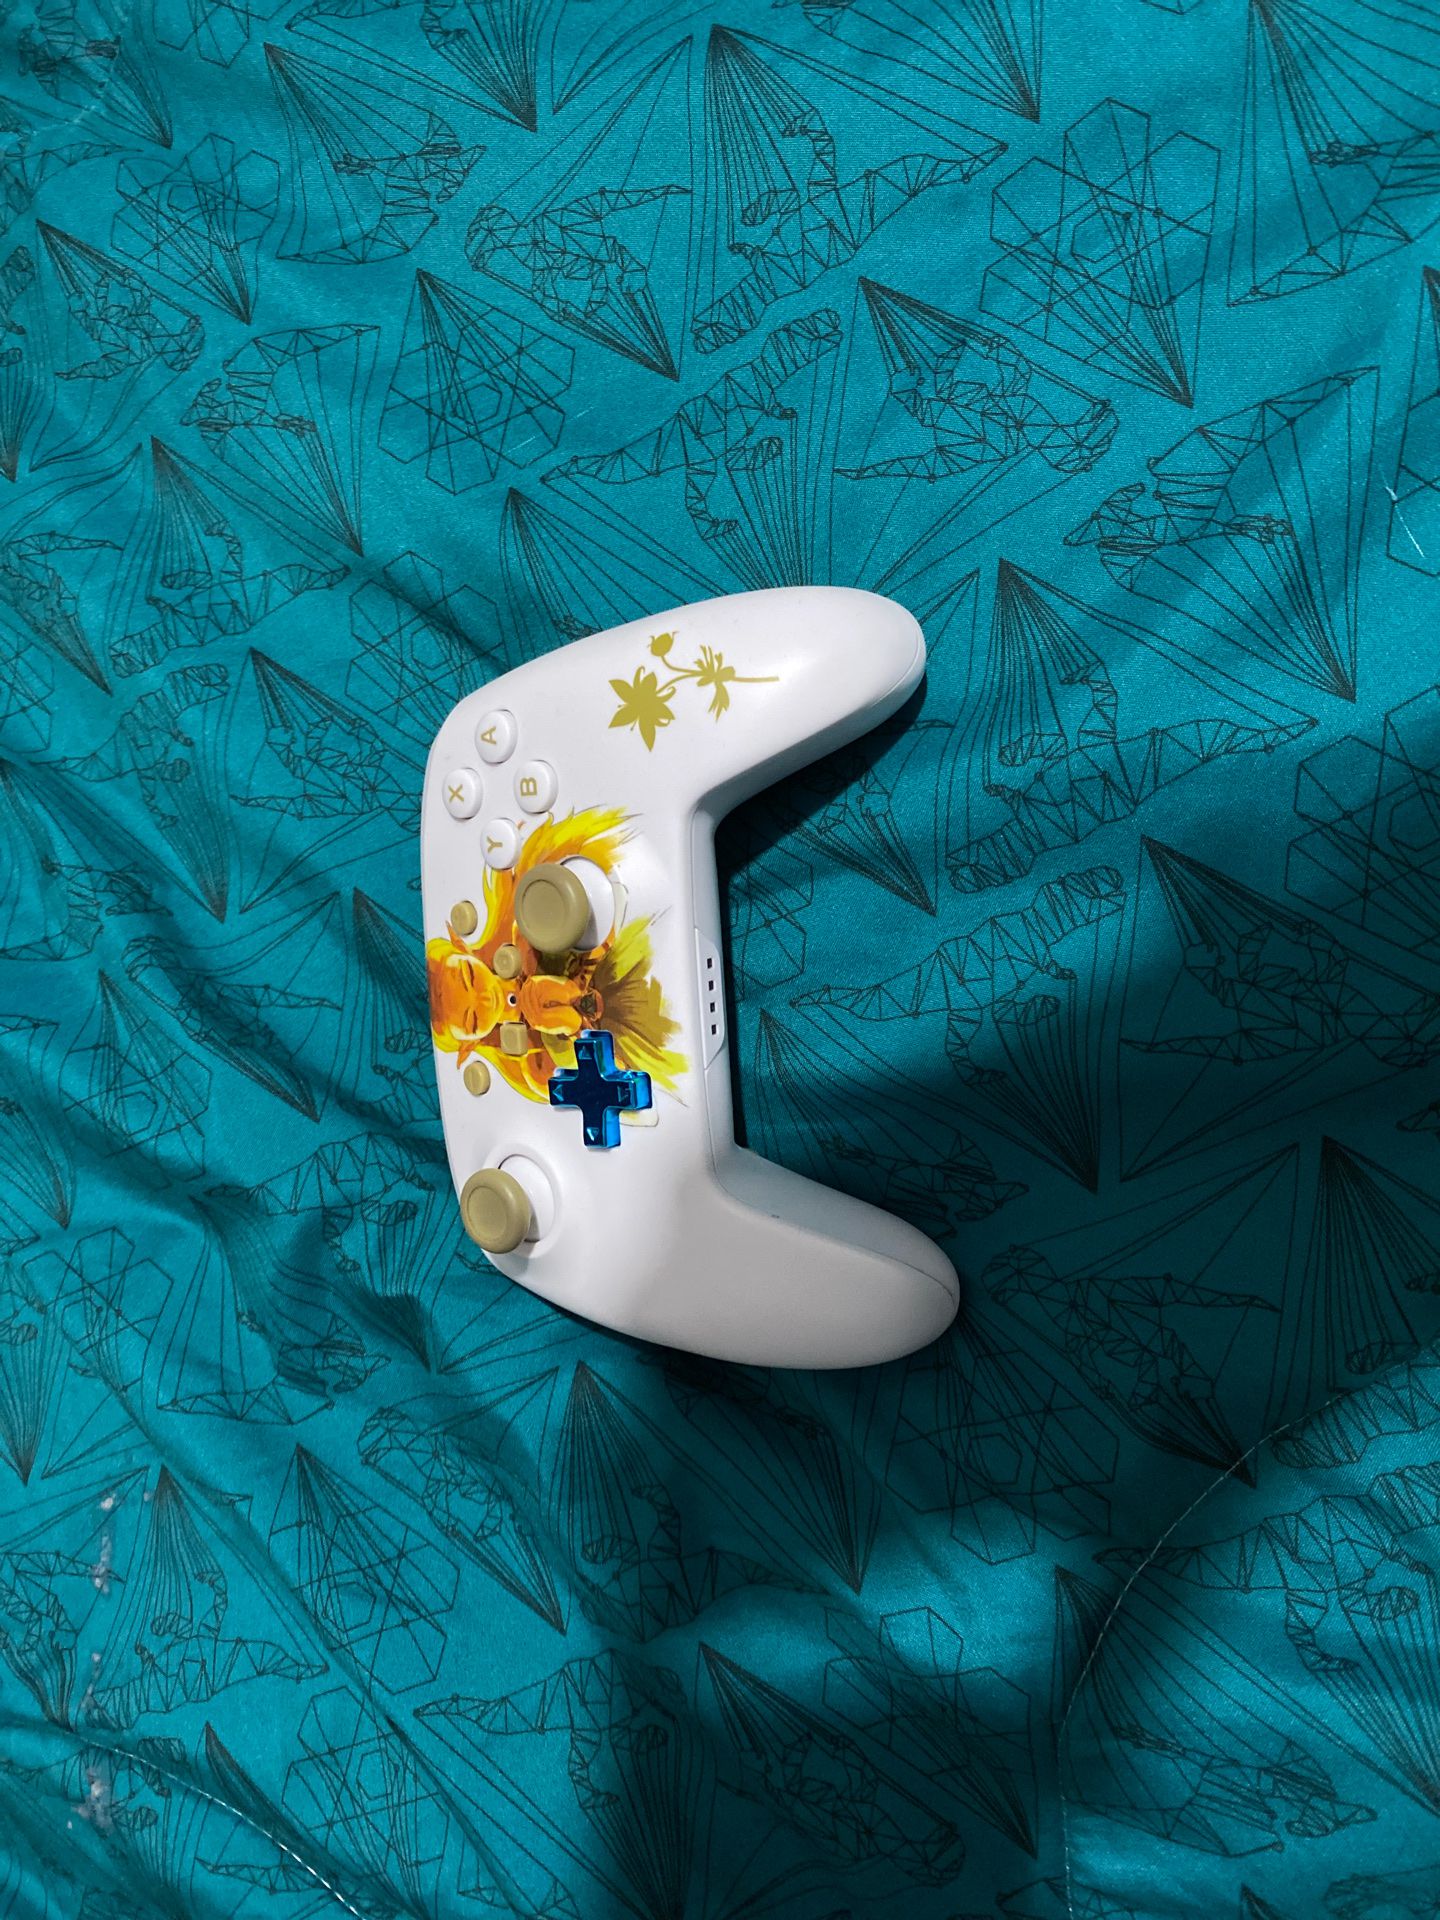 Nintendo switch pro controller with Zelda design